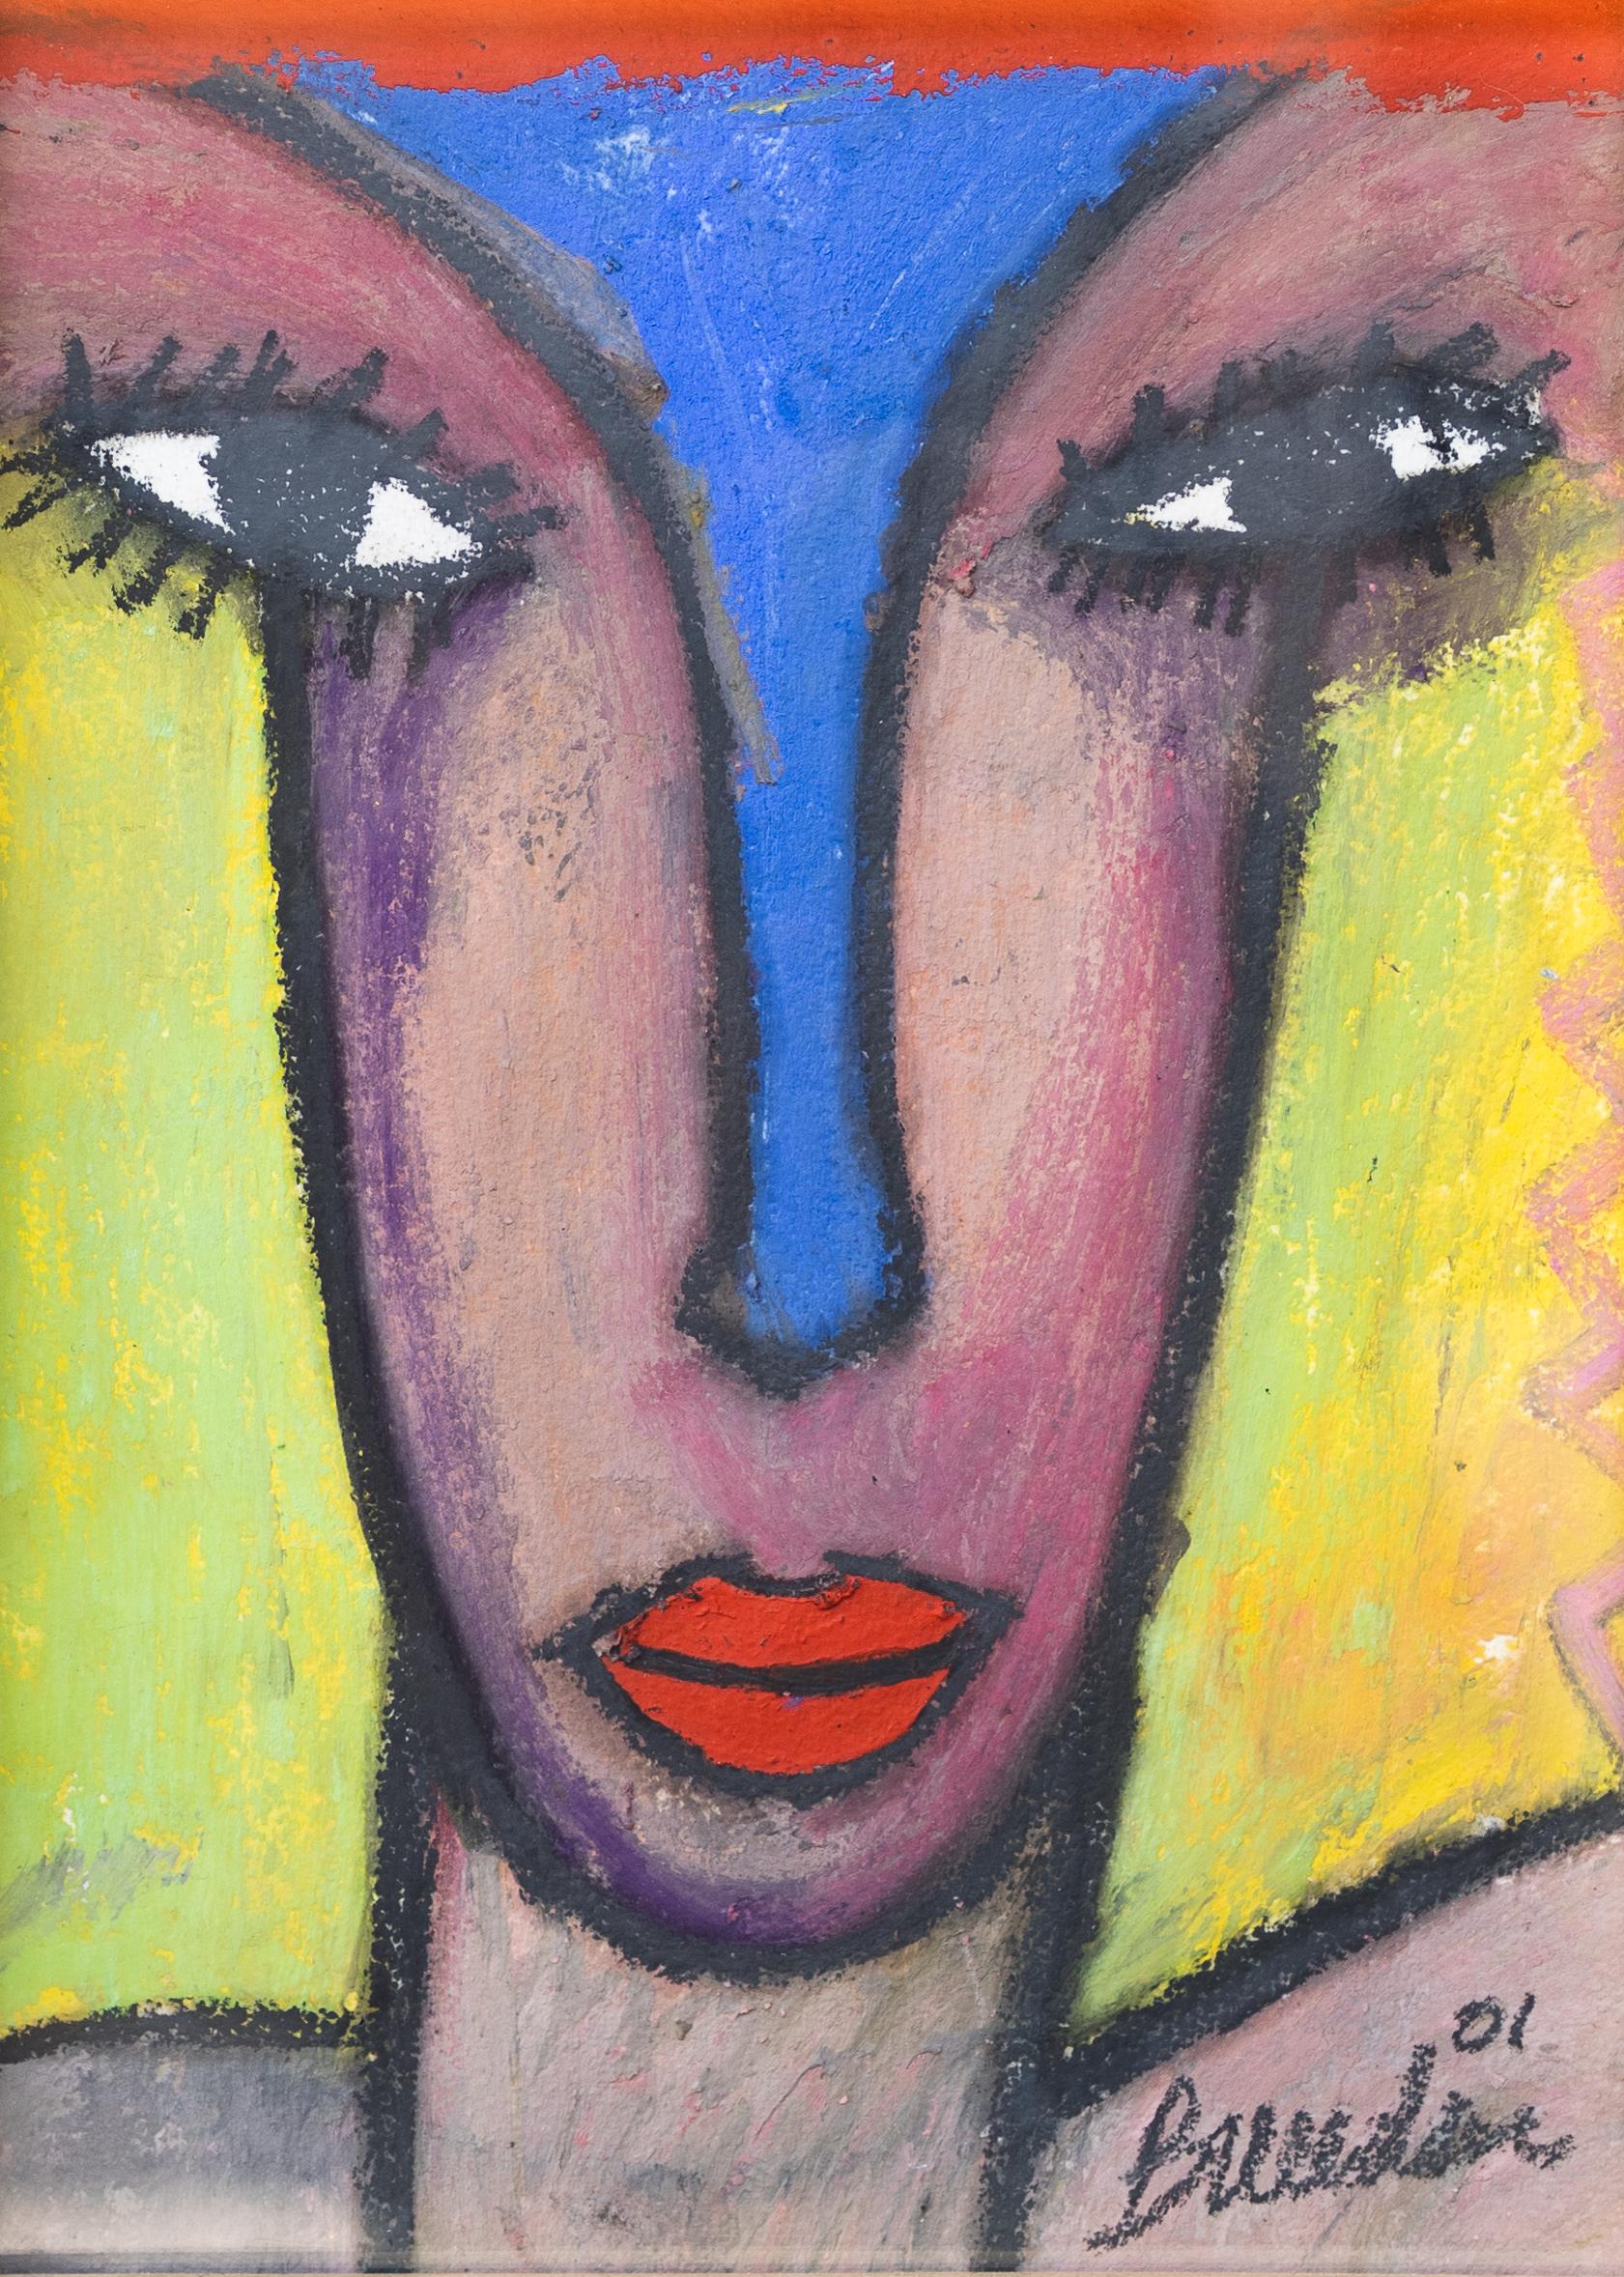 Juan Carlos Breceda Portrait Painting - Portrait of a Woman - Expressionist Mixed Media Piece